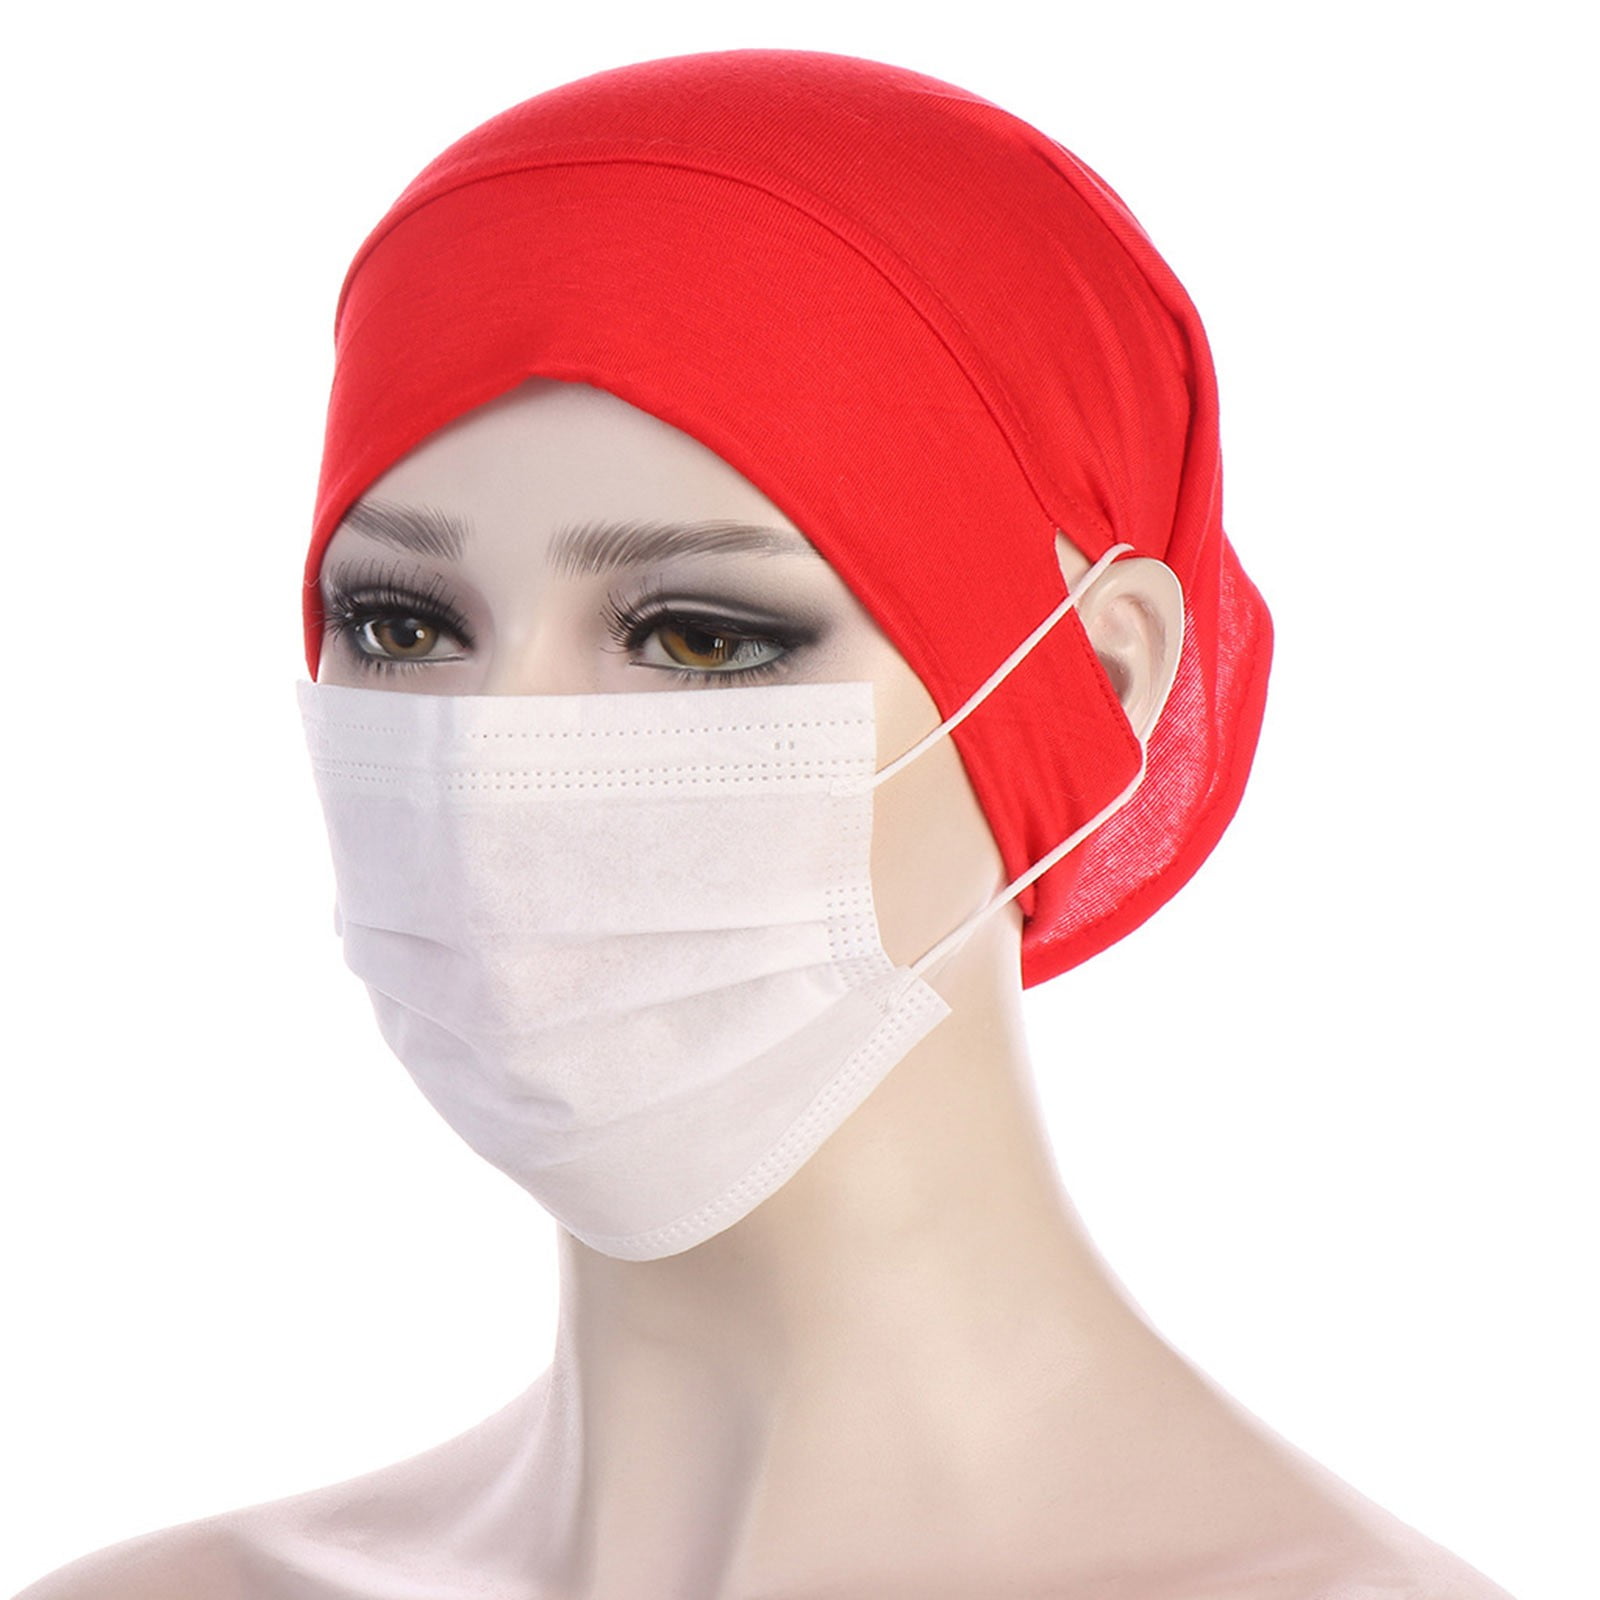 twifer bucket hat hijab undercap with ear hole underscarf inner